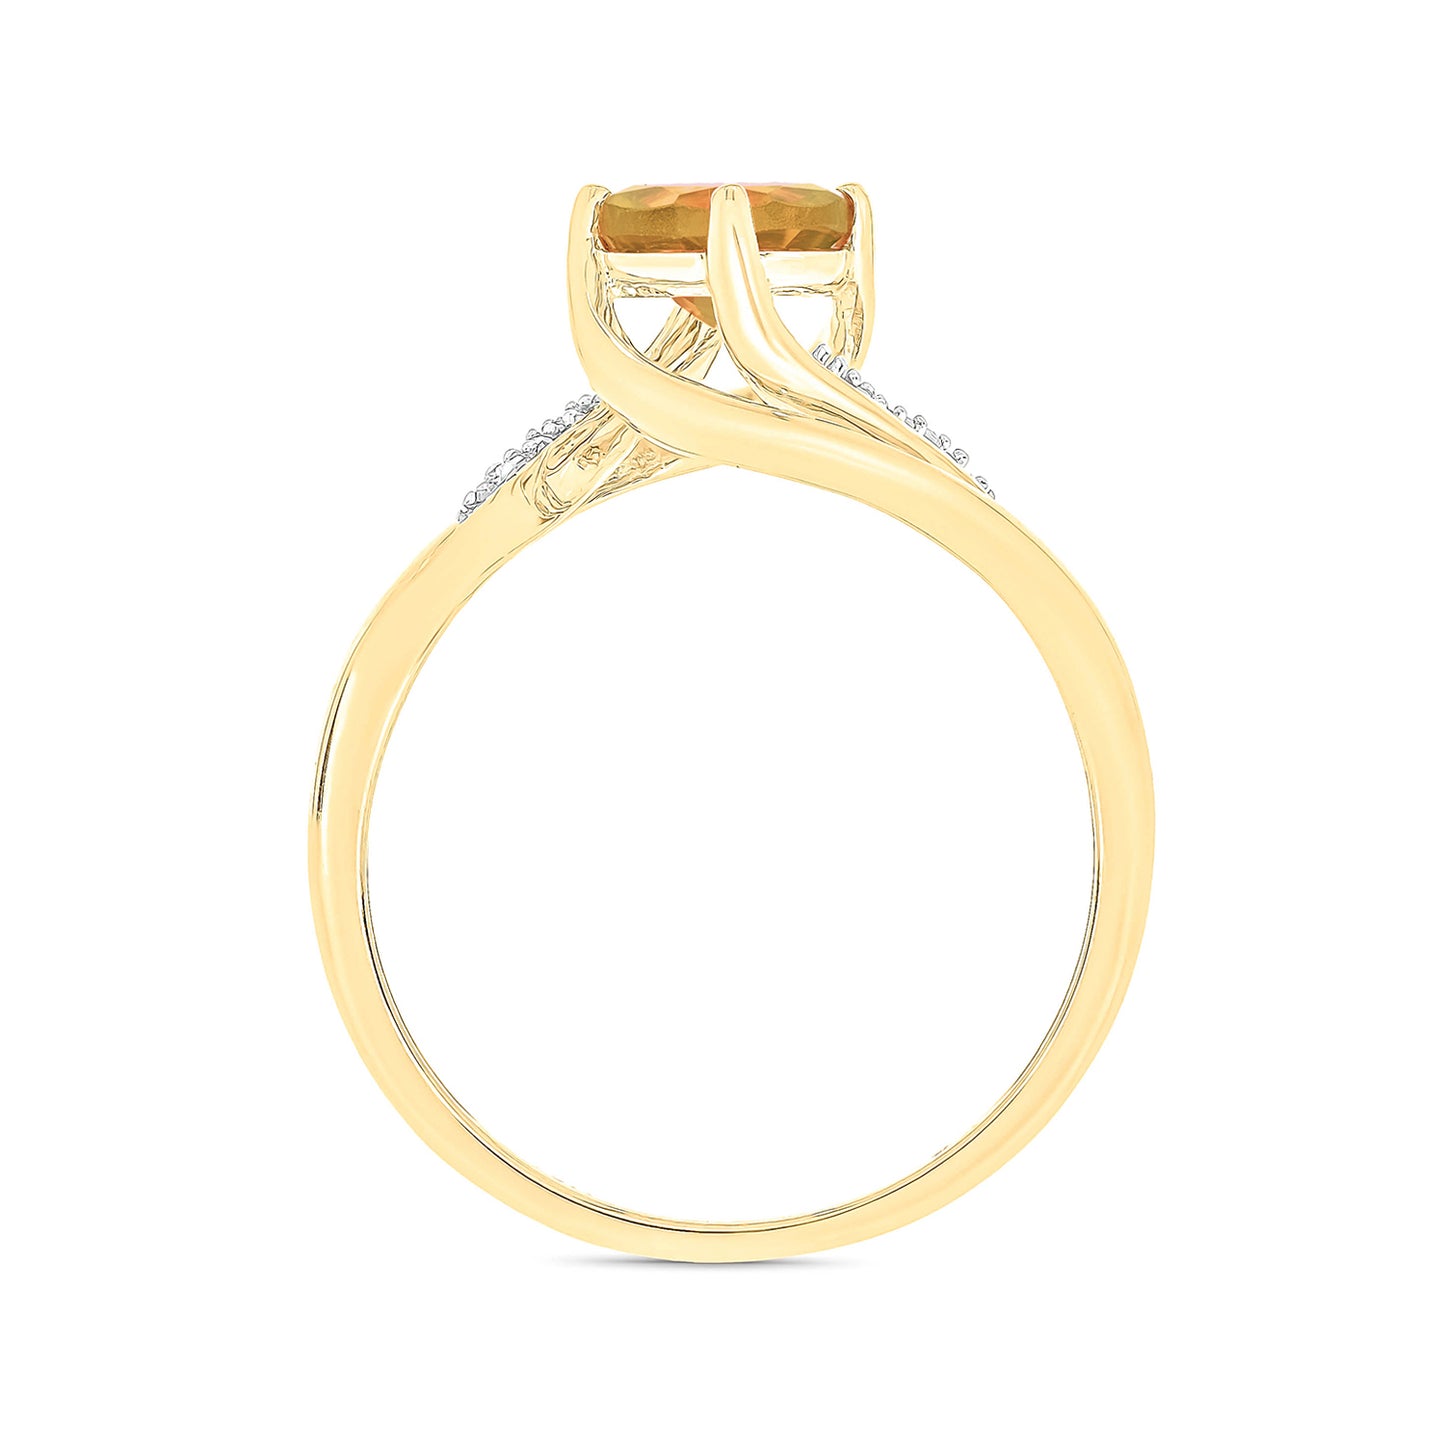 10K Gold Nouveau Perido, Citrine Gemstone & Diamond Ring